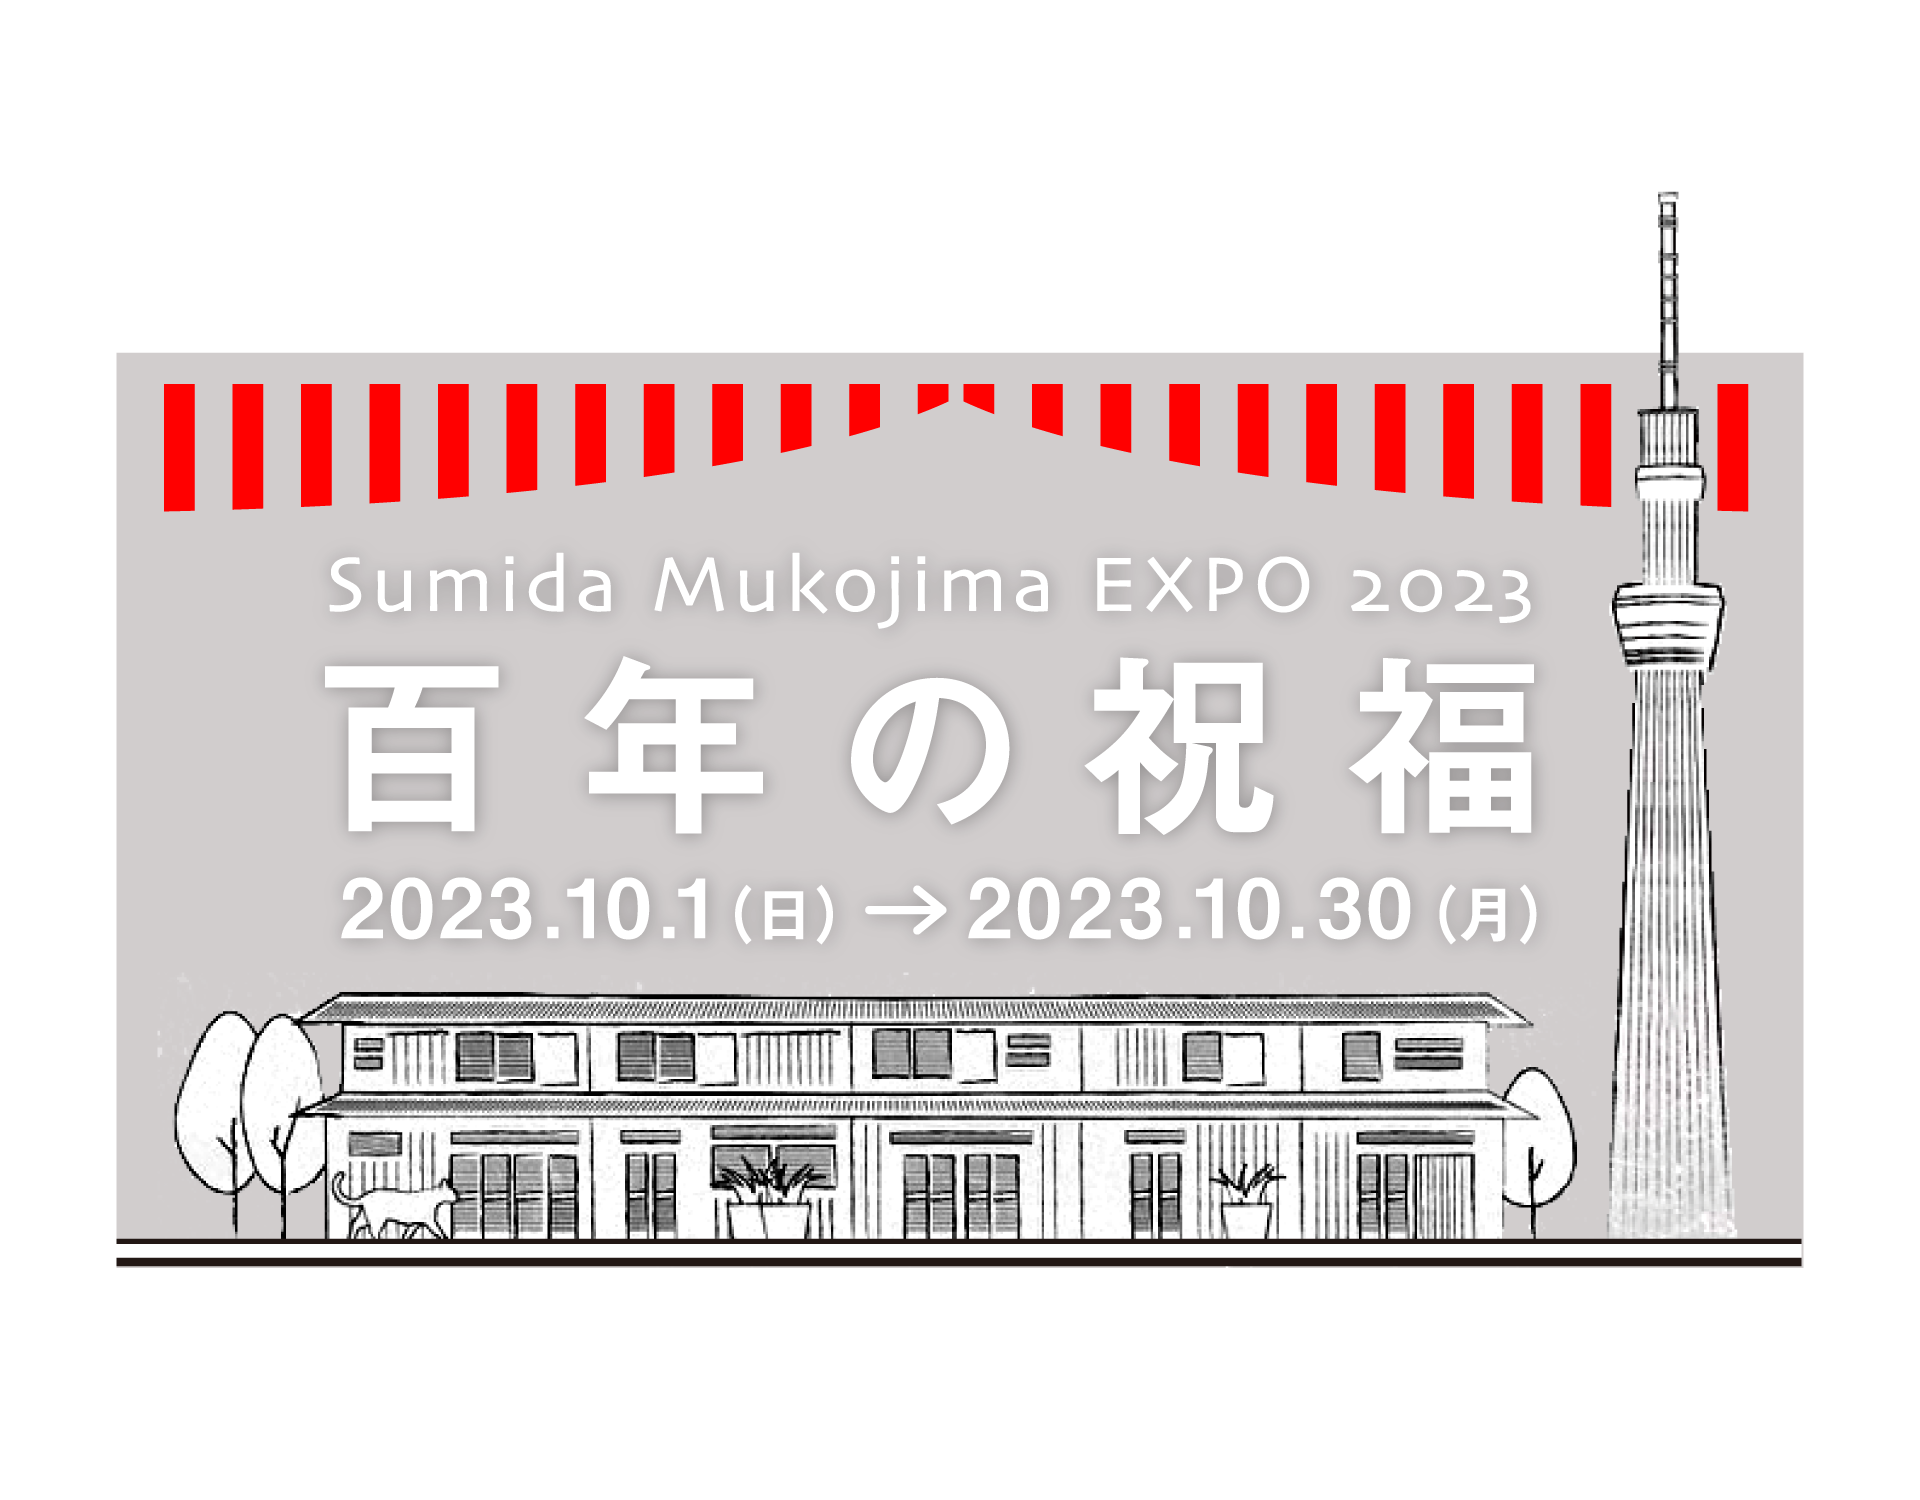 Sumida Mukoujima EXPO 2023
百年の祝福
2023.10.1（日）→ 2023.10.30（月）